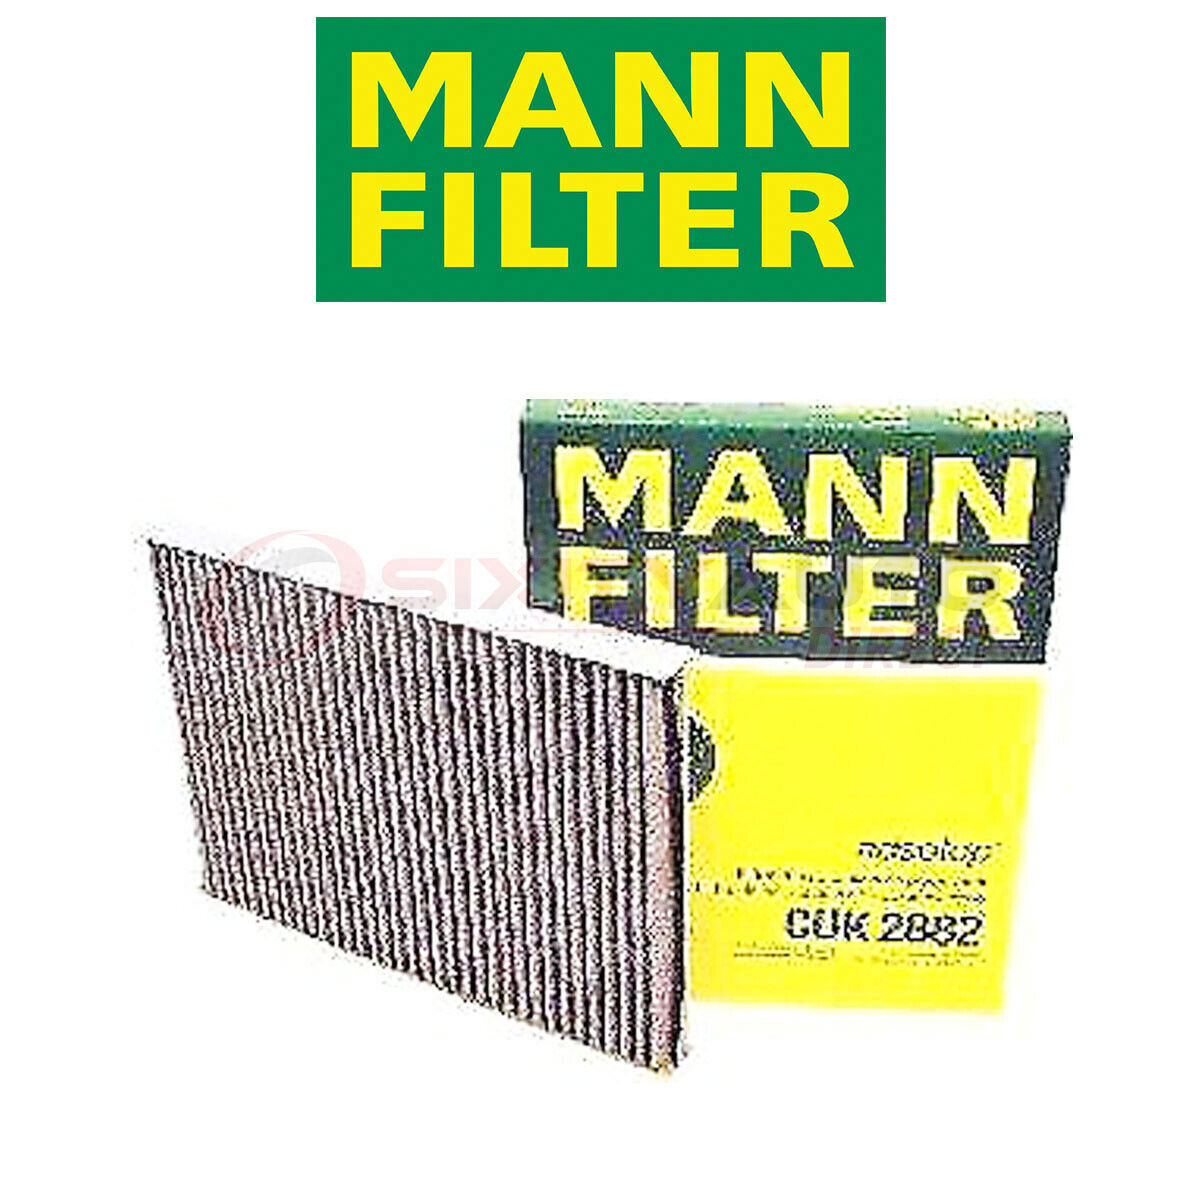 MANN FILTER CUK2882 Cabin Air Filter for Filtration System iv